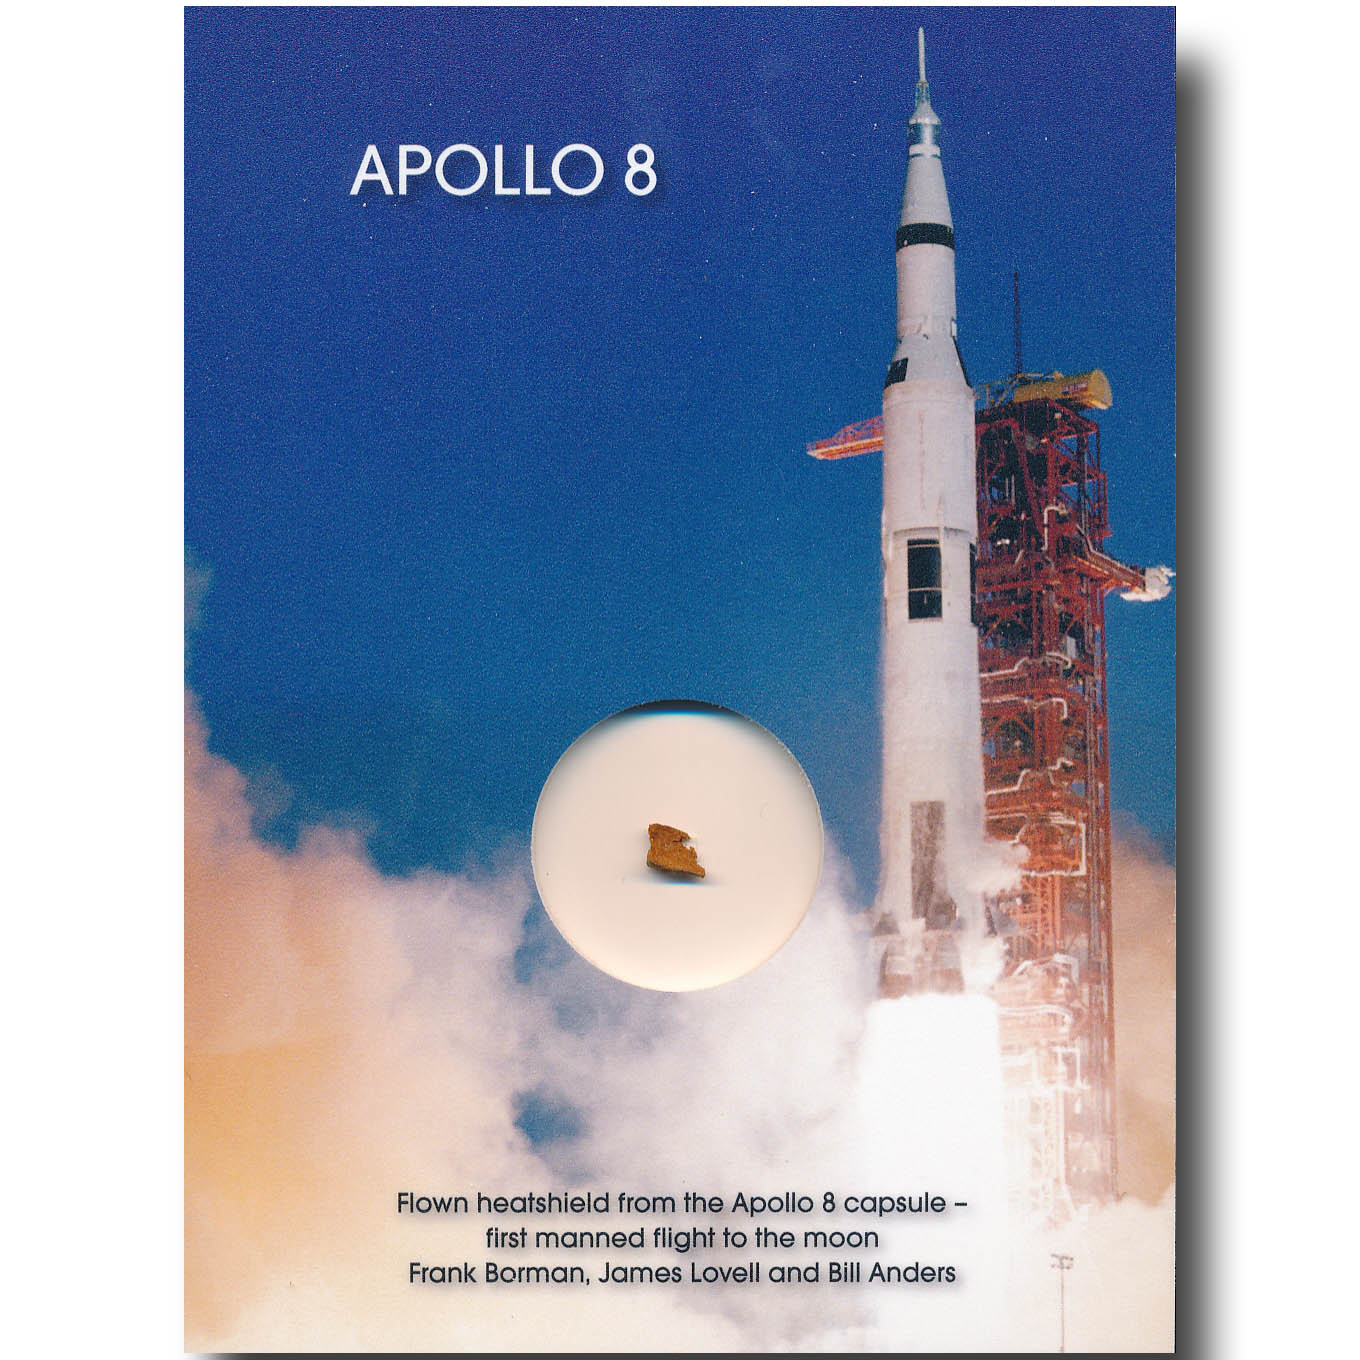 Apollo 8 moon flown heatshield presentation